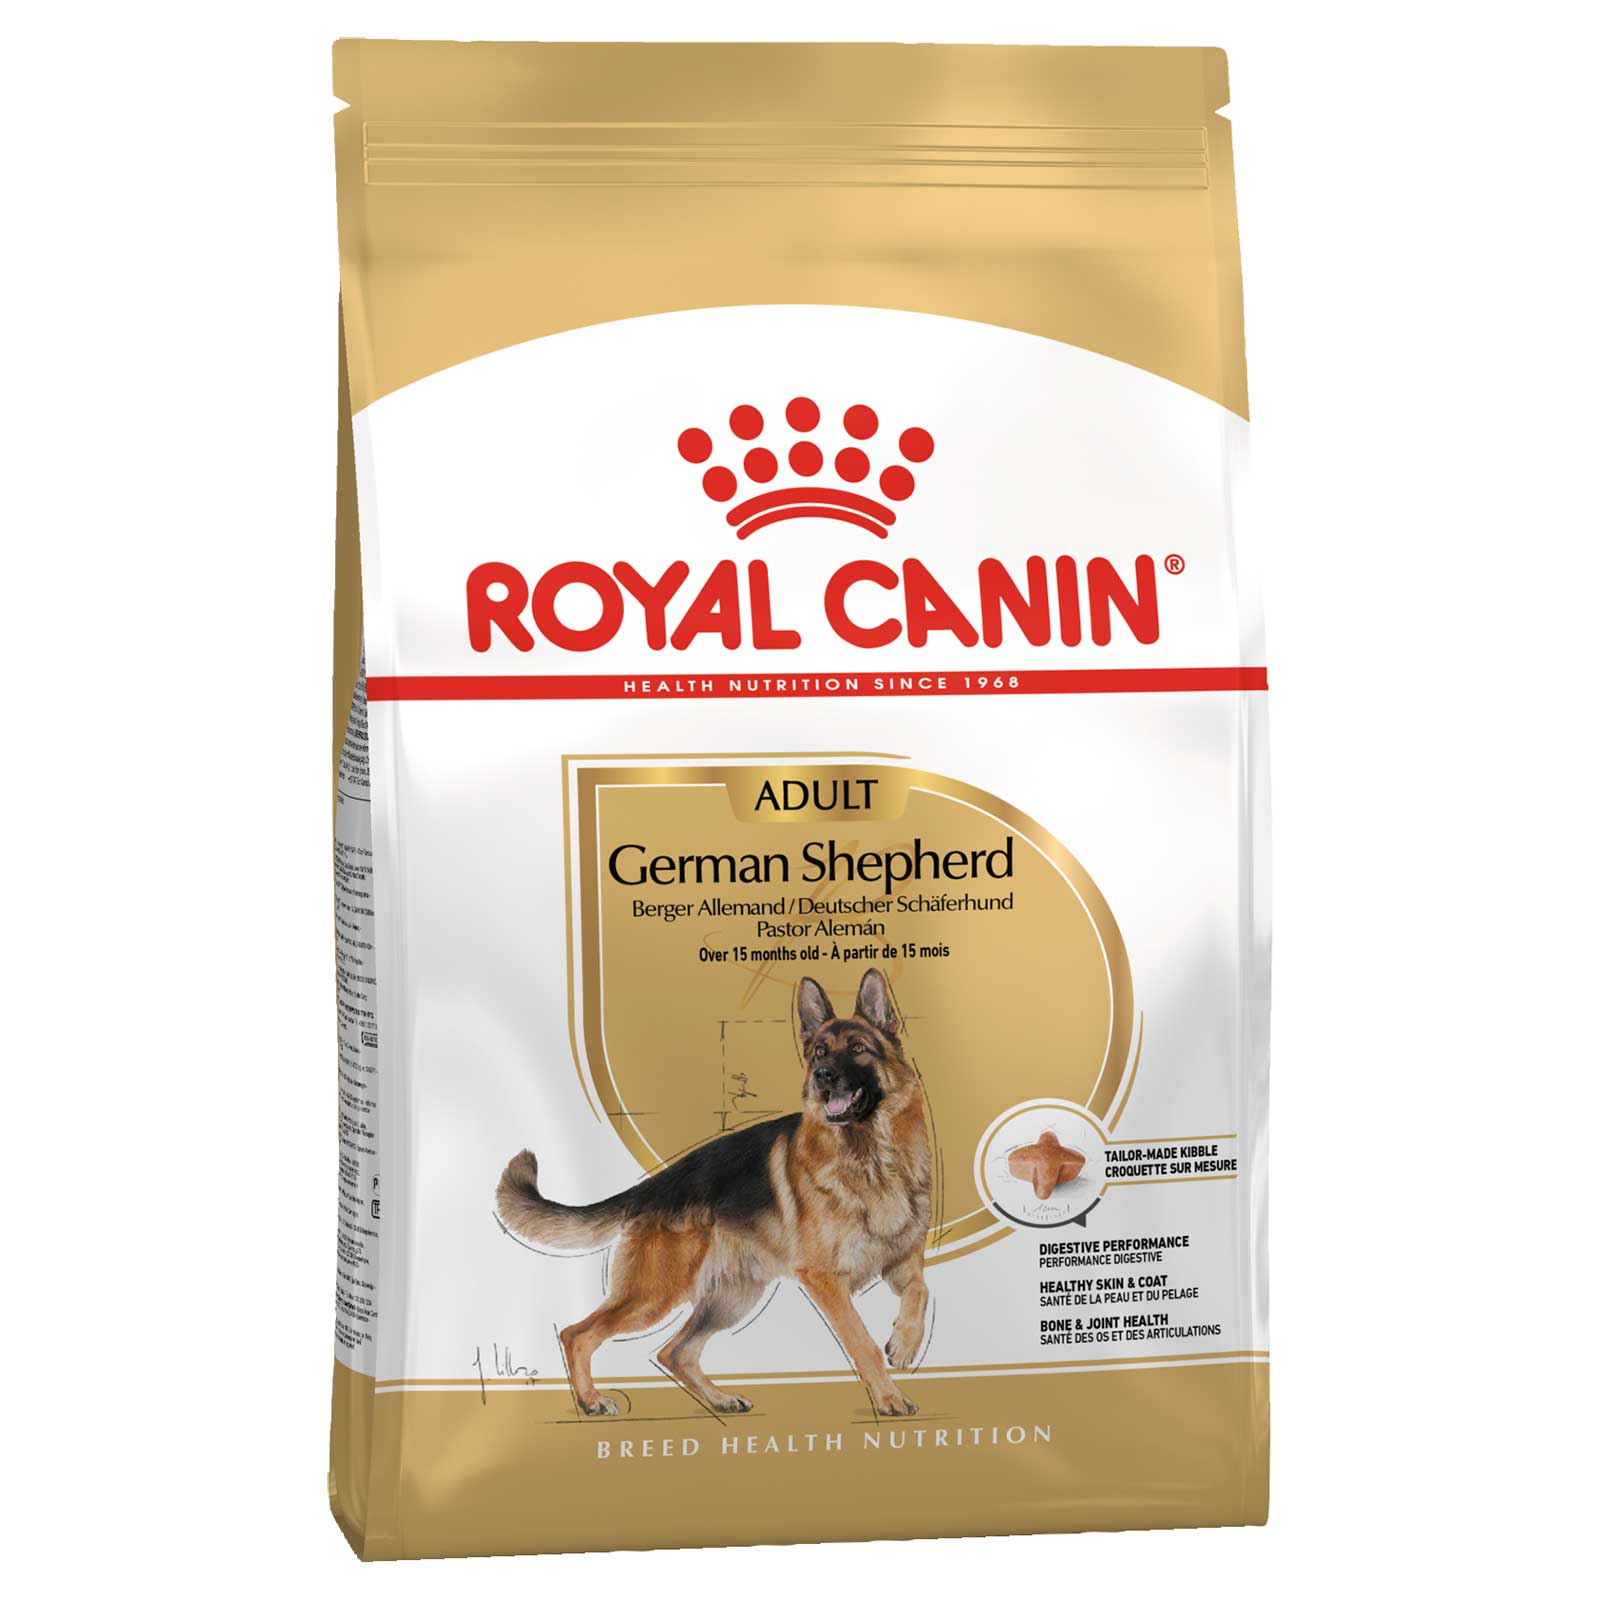 Royal Canin Dog Food Adult German Shepherd